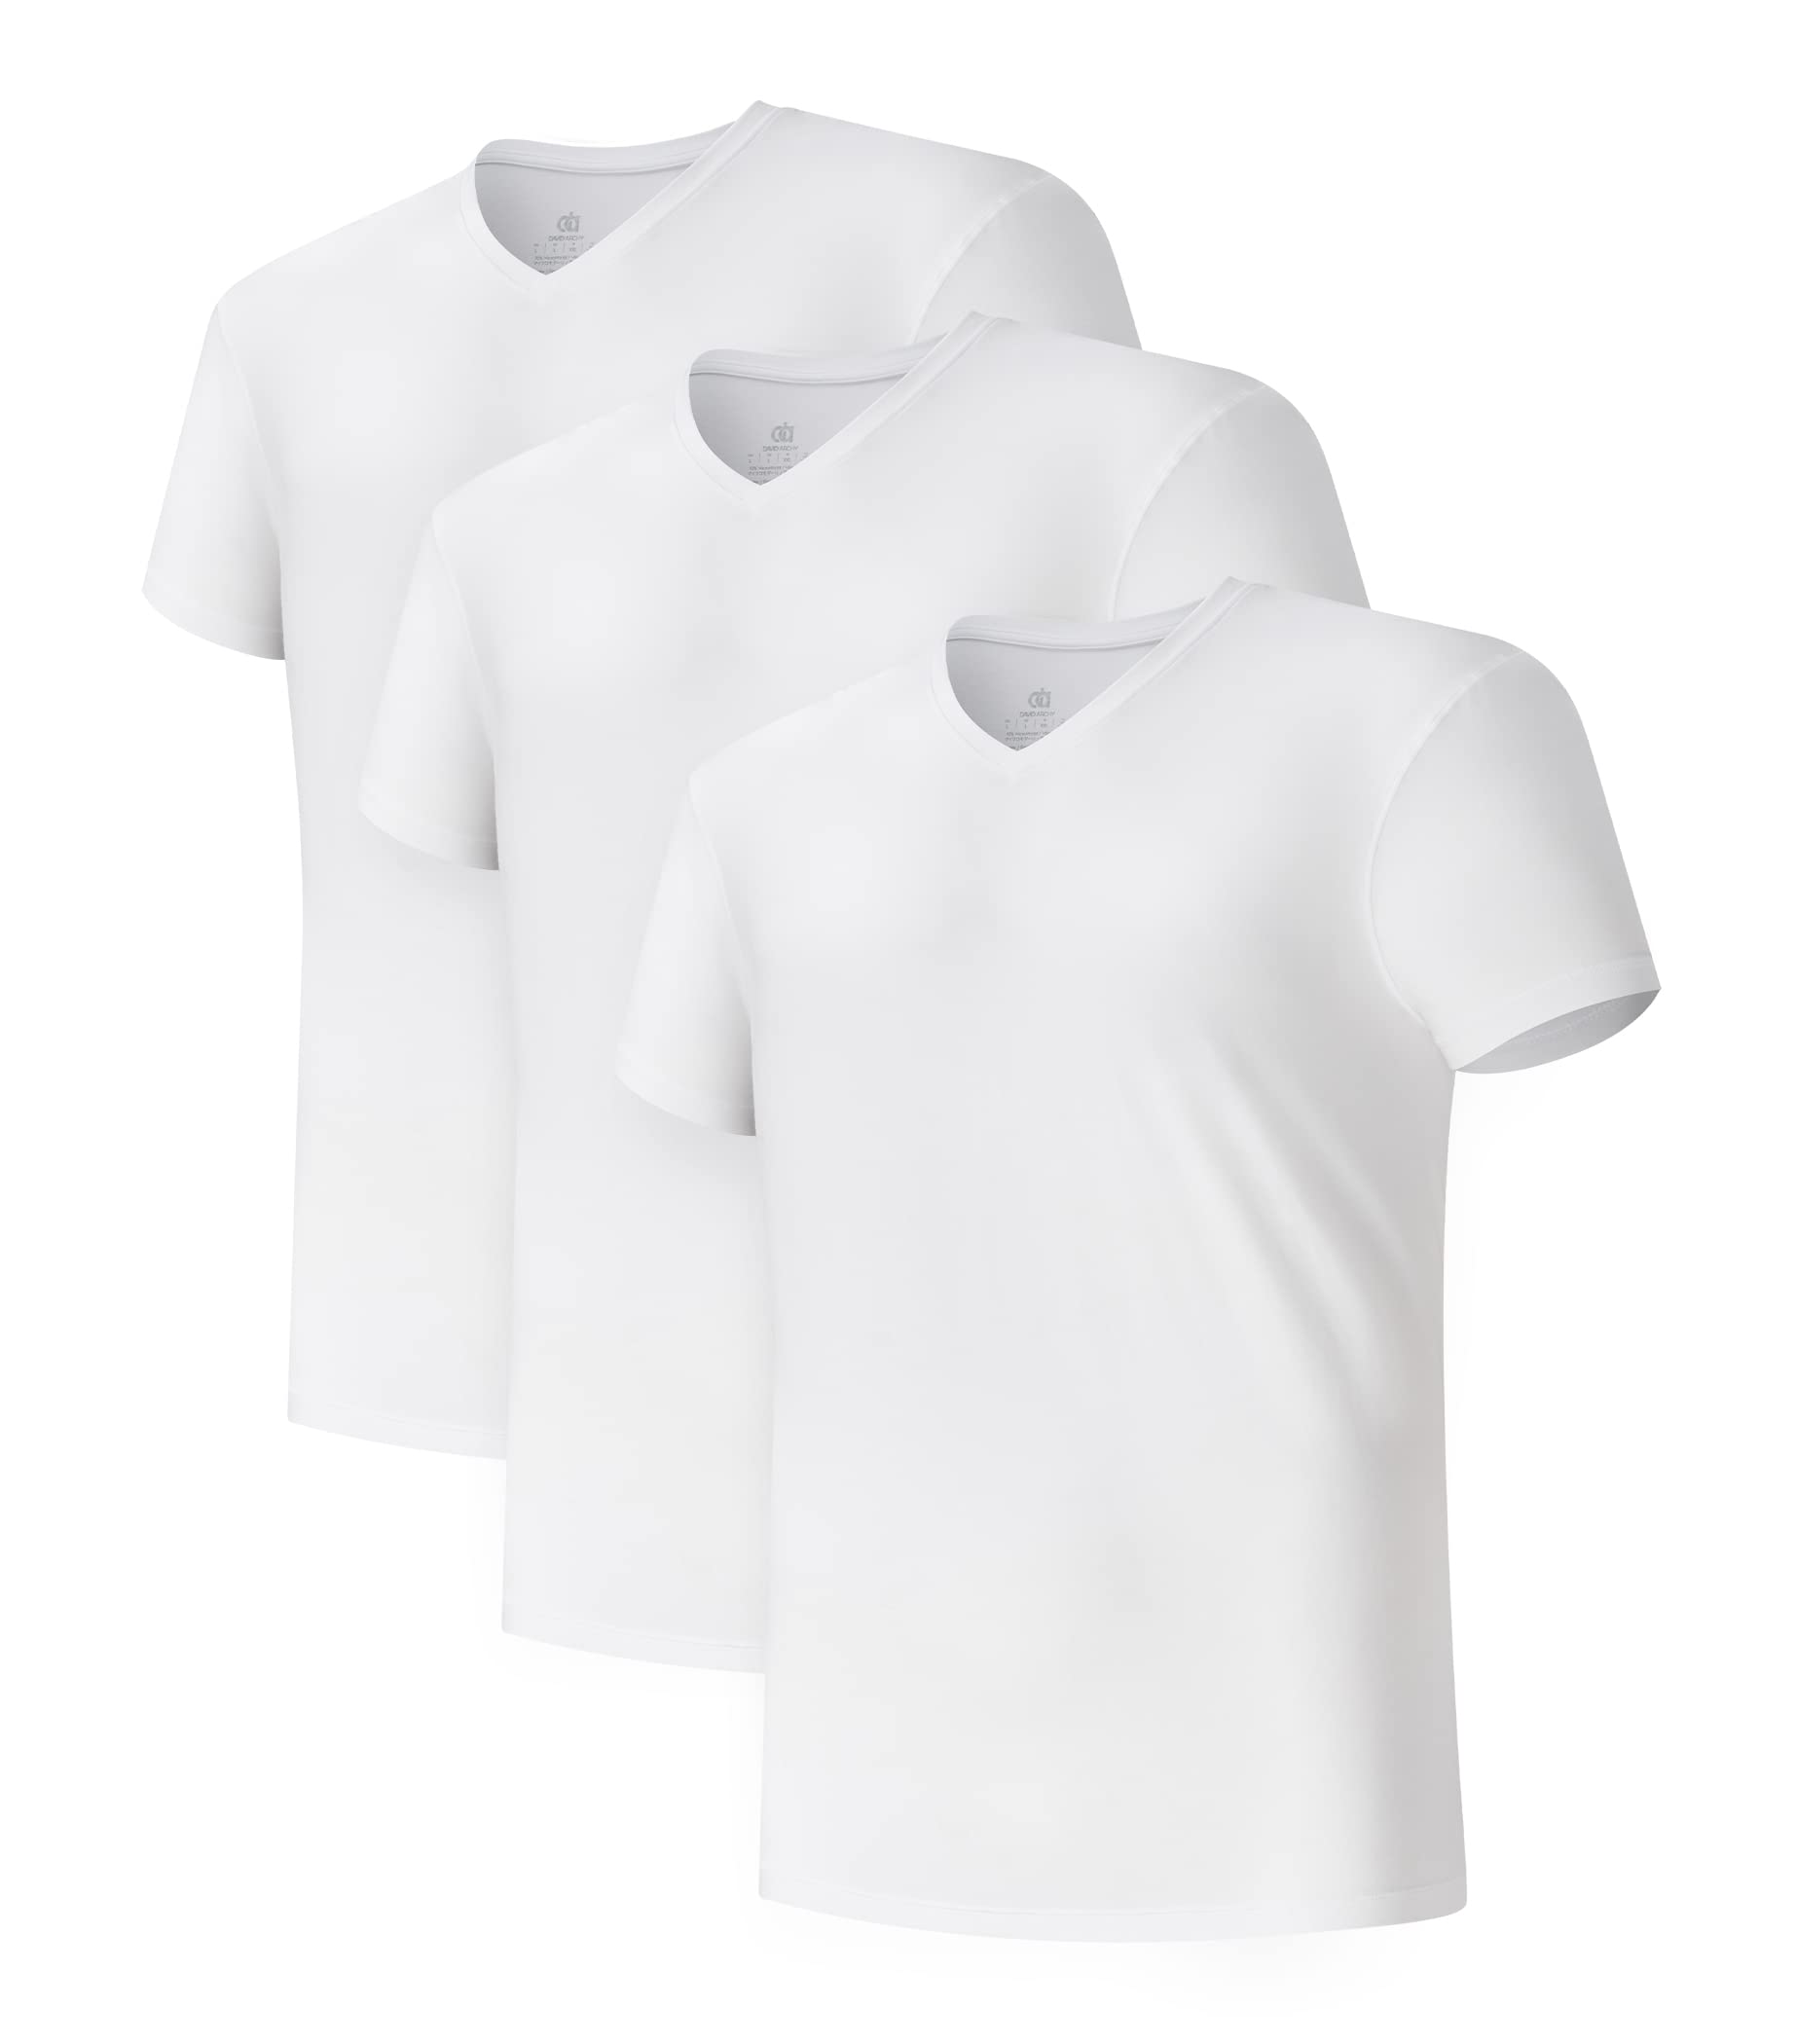 DAVID ARCHY Herren Unterhemden Business aus Micro Modal mit V-Ausschnitt Unterhemd Weich Kurzarm Shirt 3er Pack Weich Angenehm